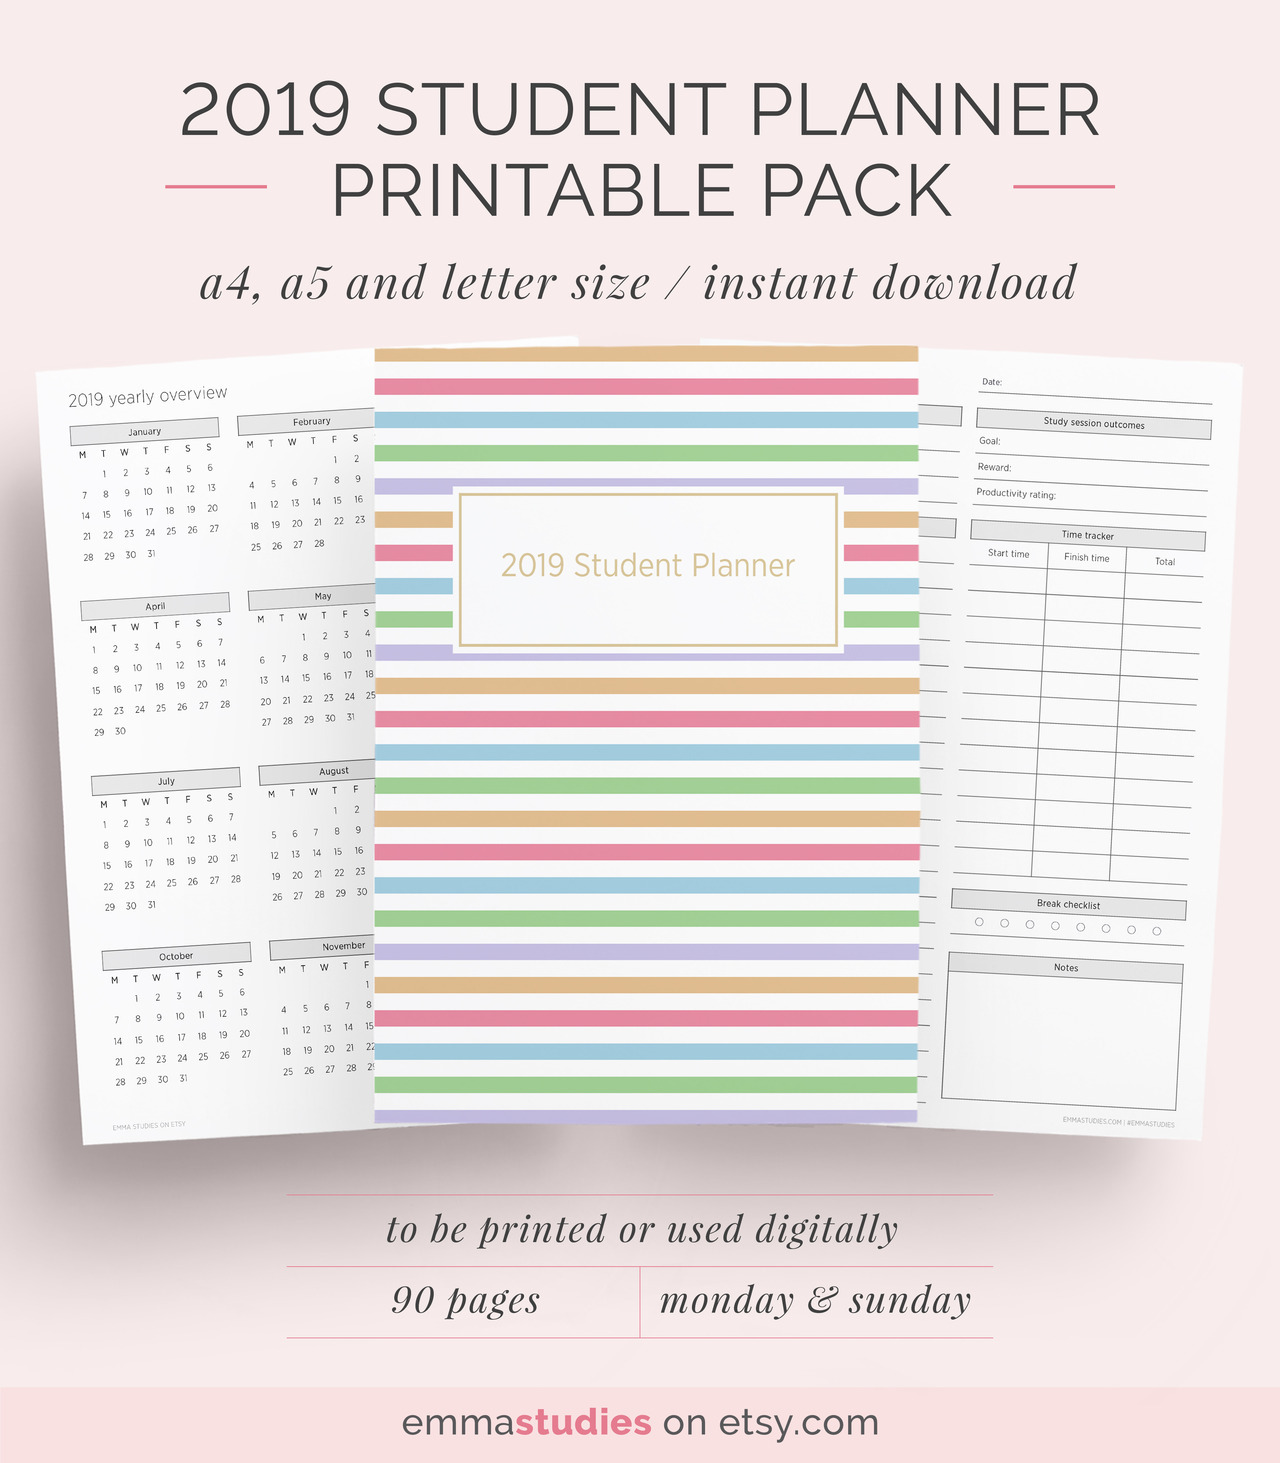 emmastudies 2019 Student Printable Planner Here... Studyblr